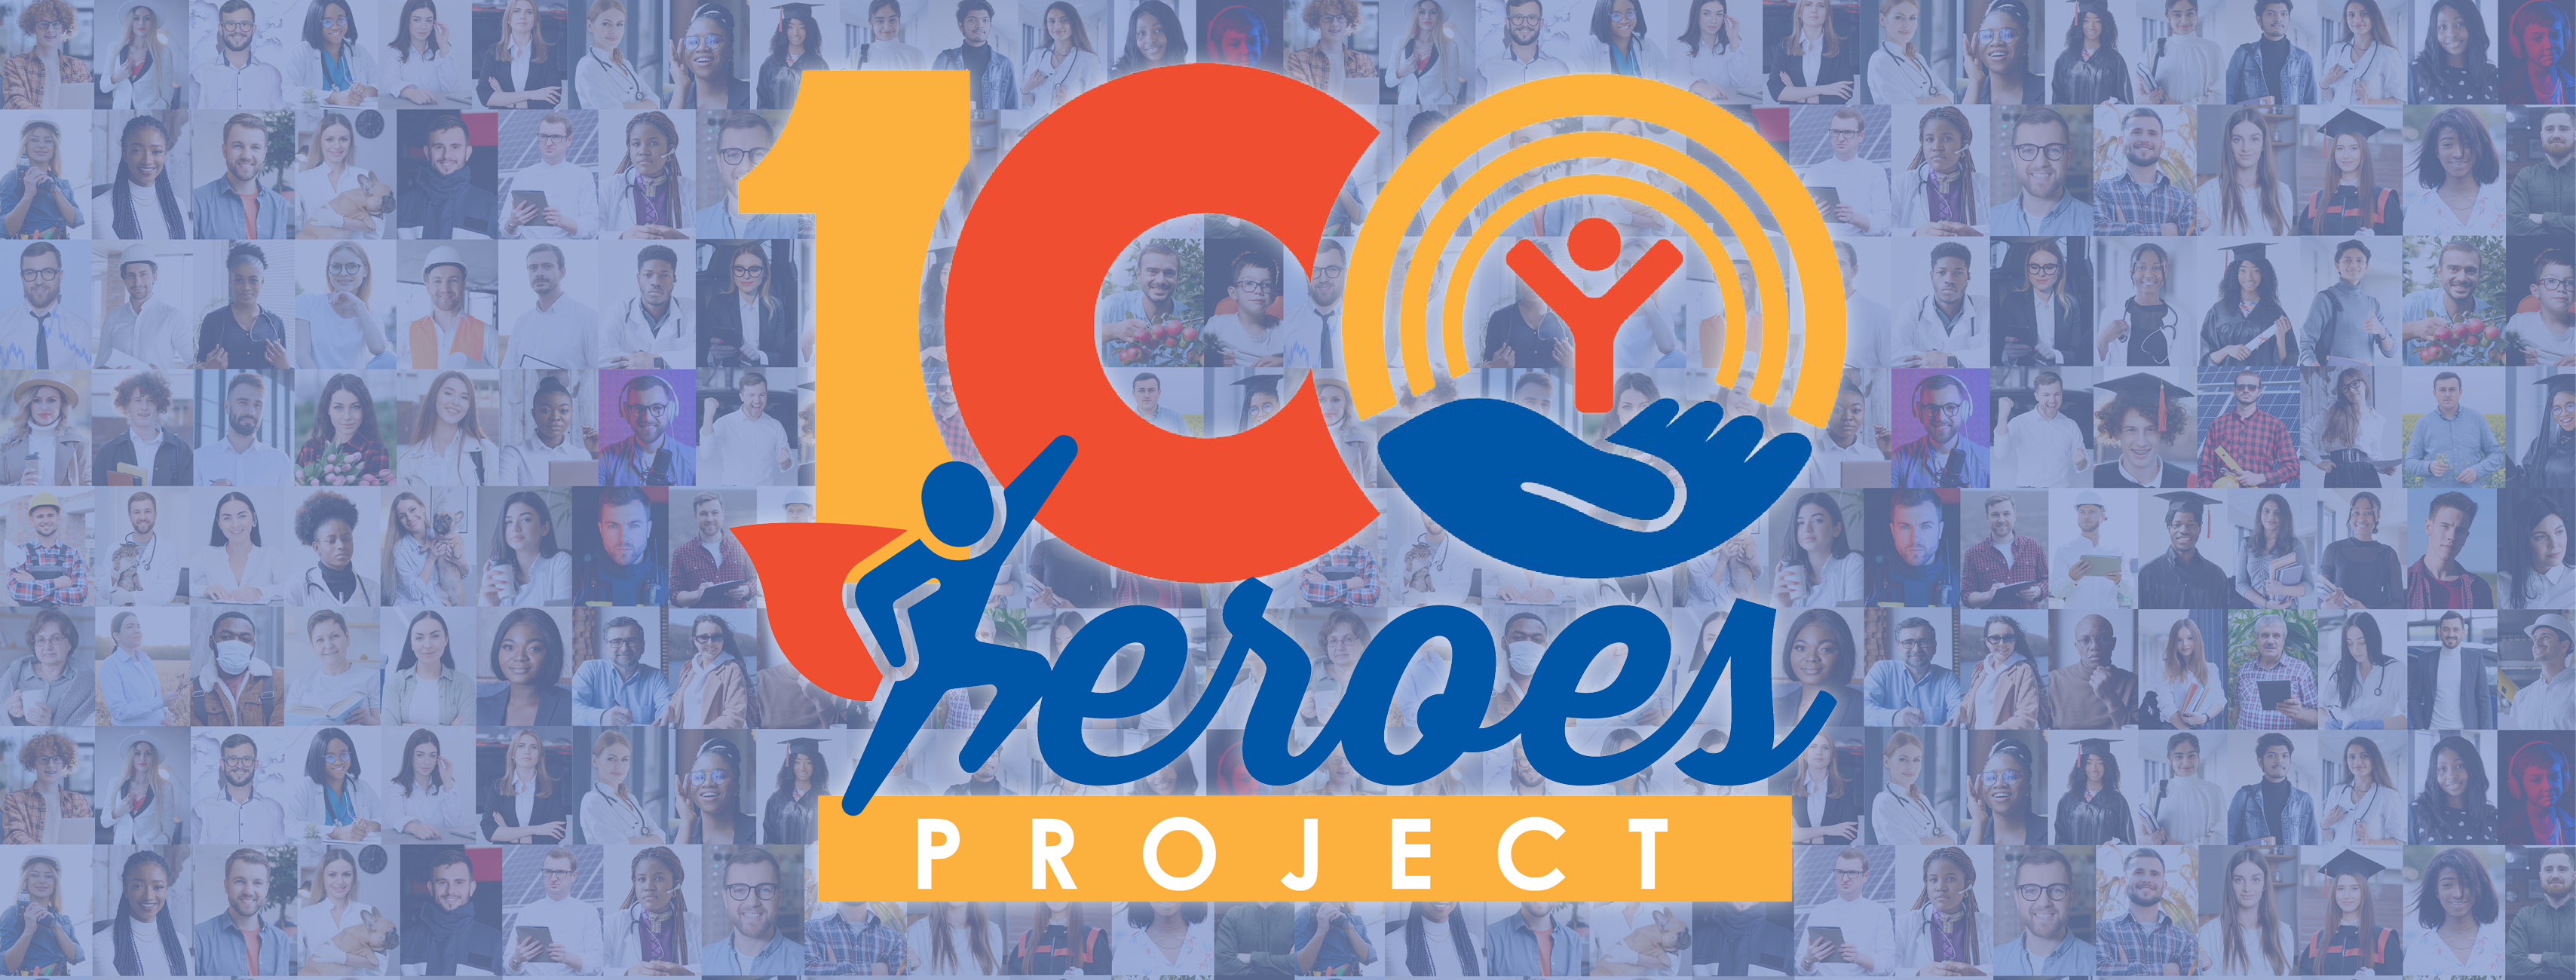 100 Heroes Banner